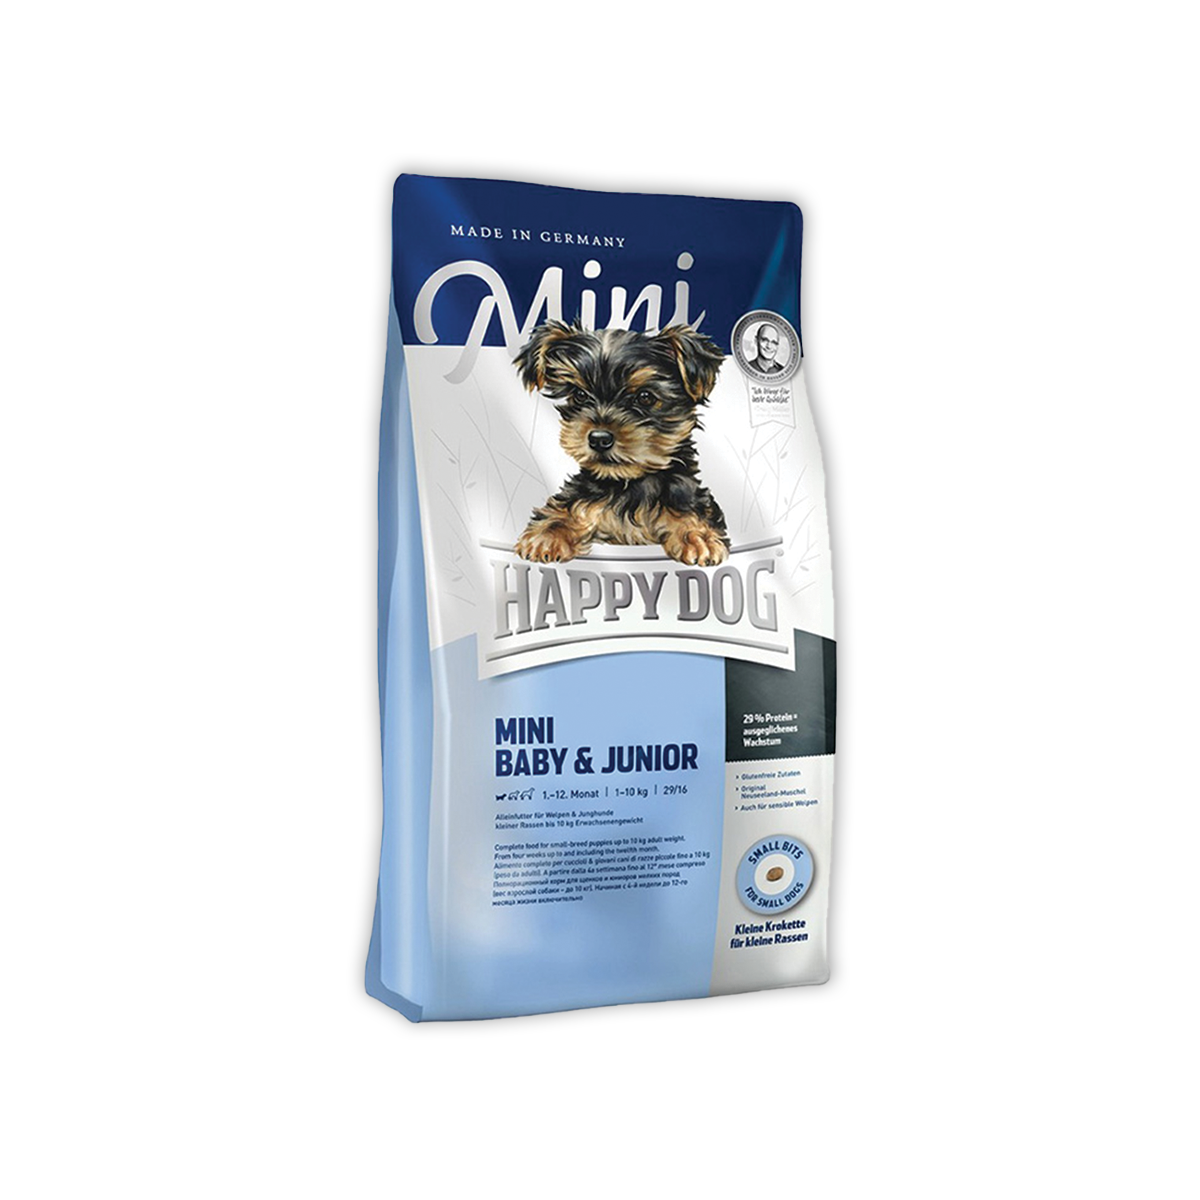 Happy Dog Mini Baby&Junior แฮปปี้ ด็อก มินิ เบบี้ แอนด์ จูเนียร์ อาหารสำหรับลูกสุนัขพันธุ์เล็ก